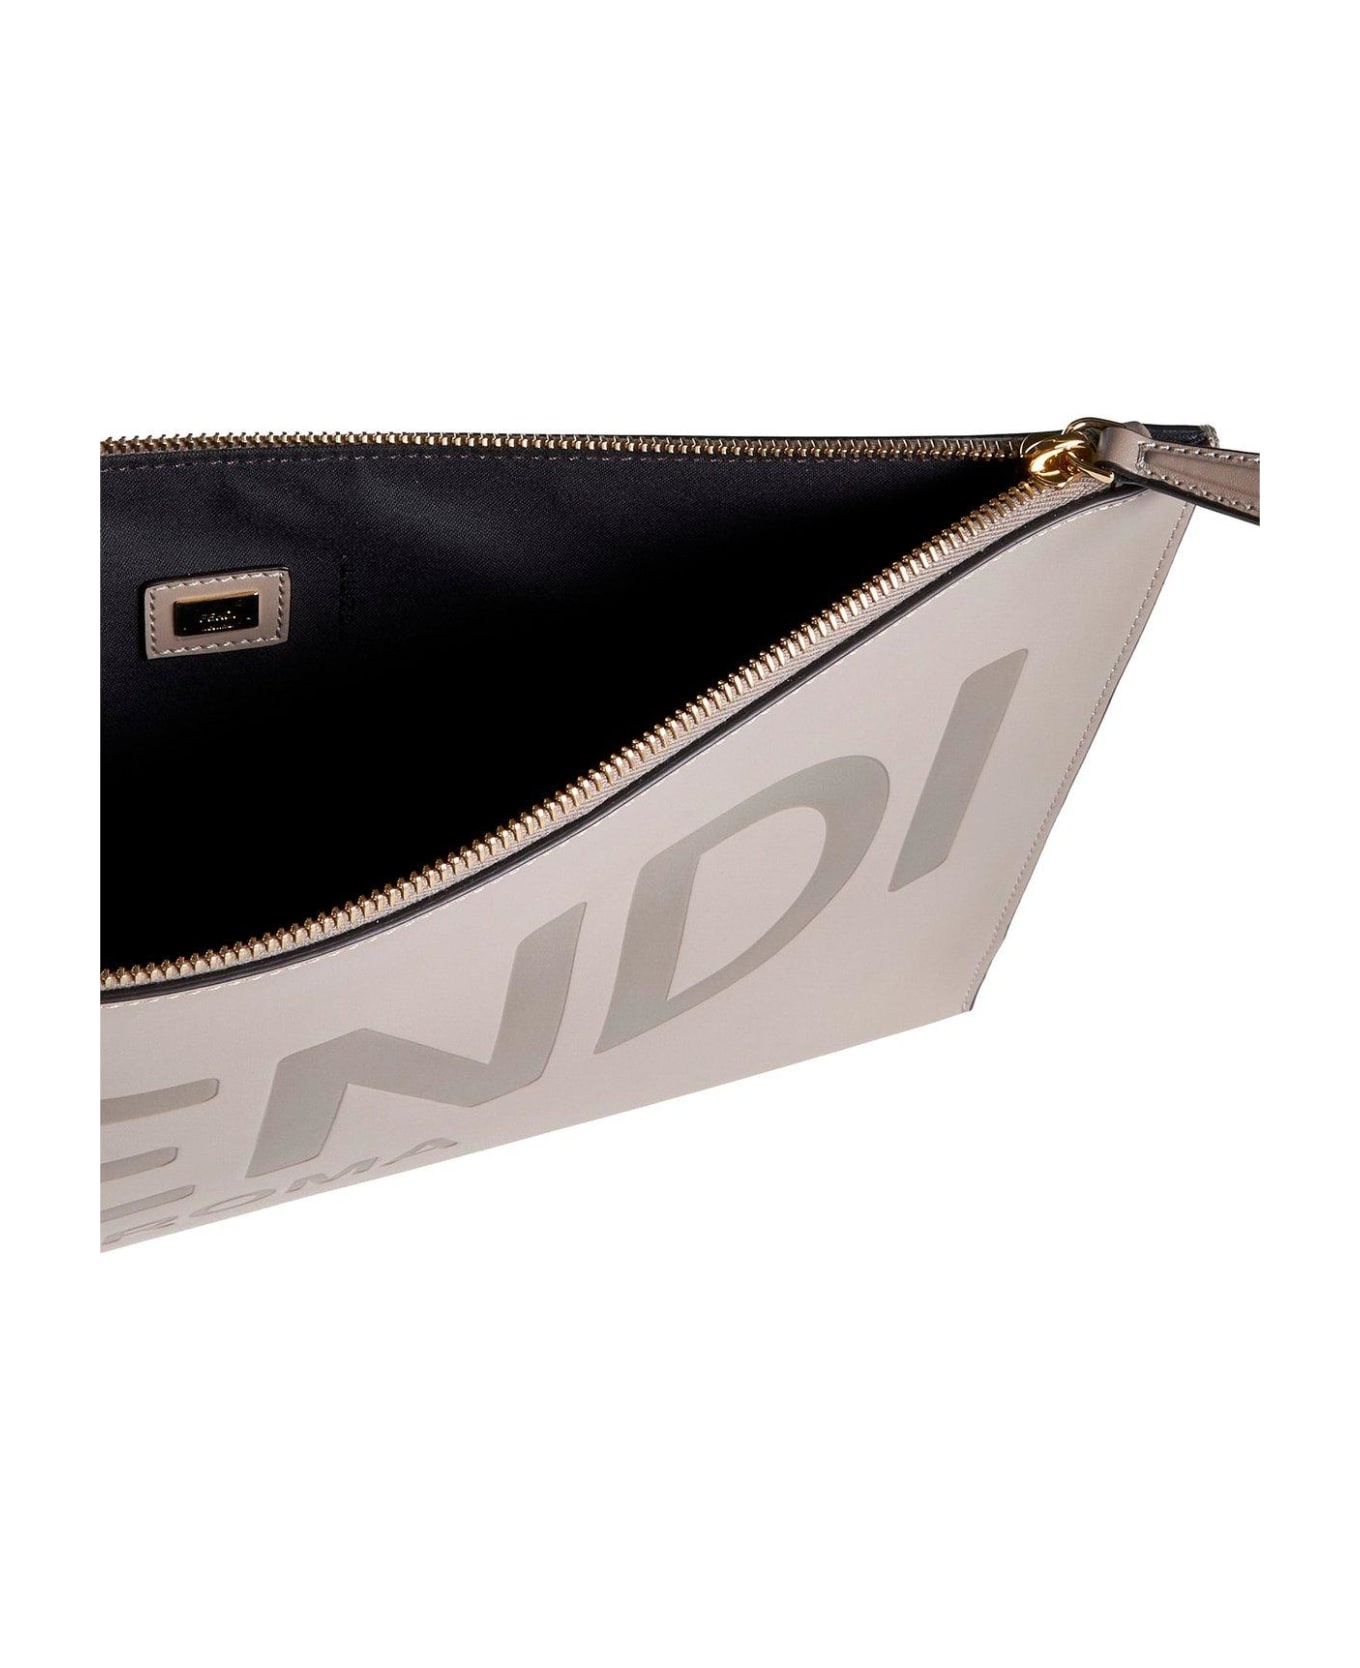 Fendi Logo Debossed Zipped Clutch Bag - Grigio